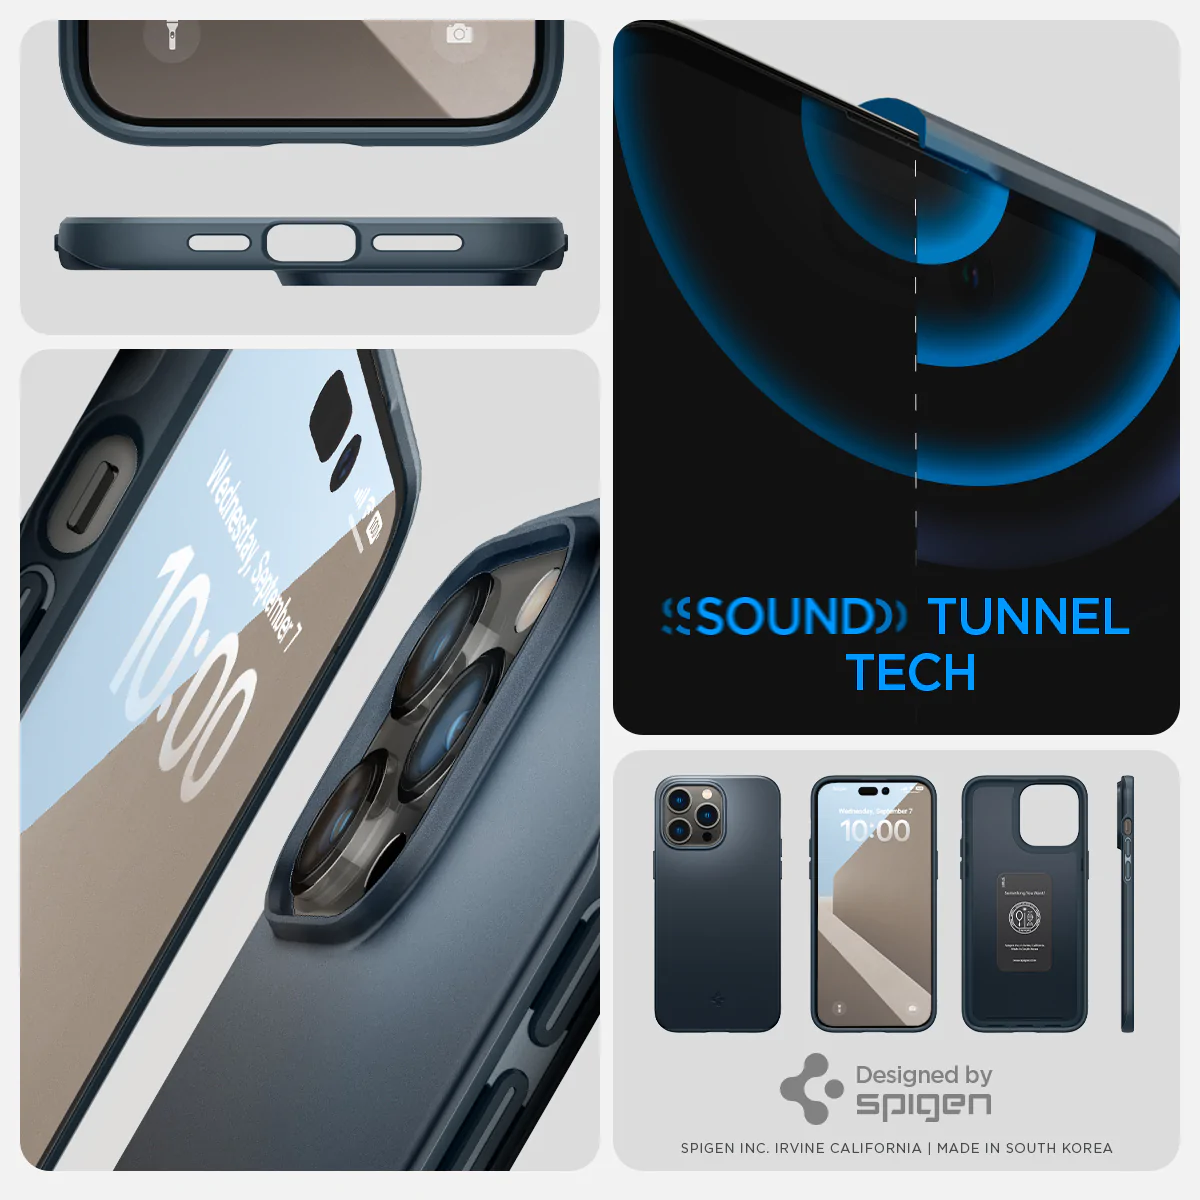 Spigen iPhone 14 Pro Max Thinfit Series-Black